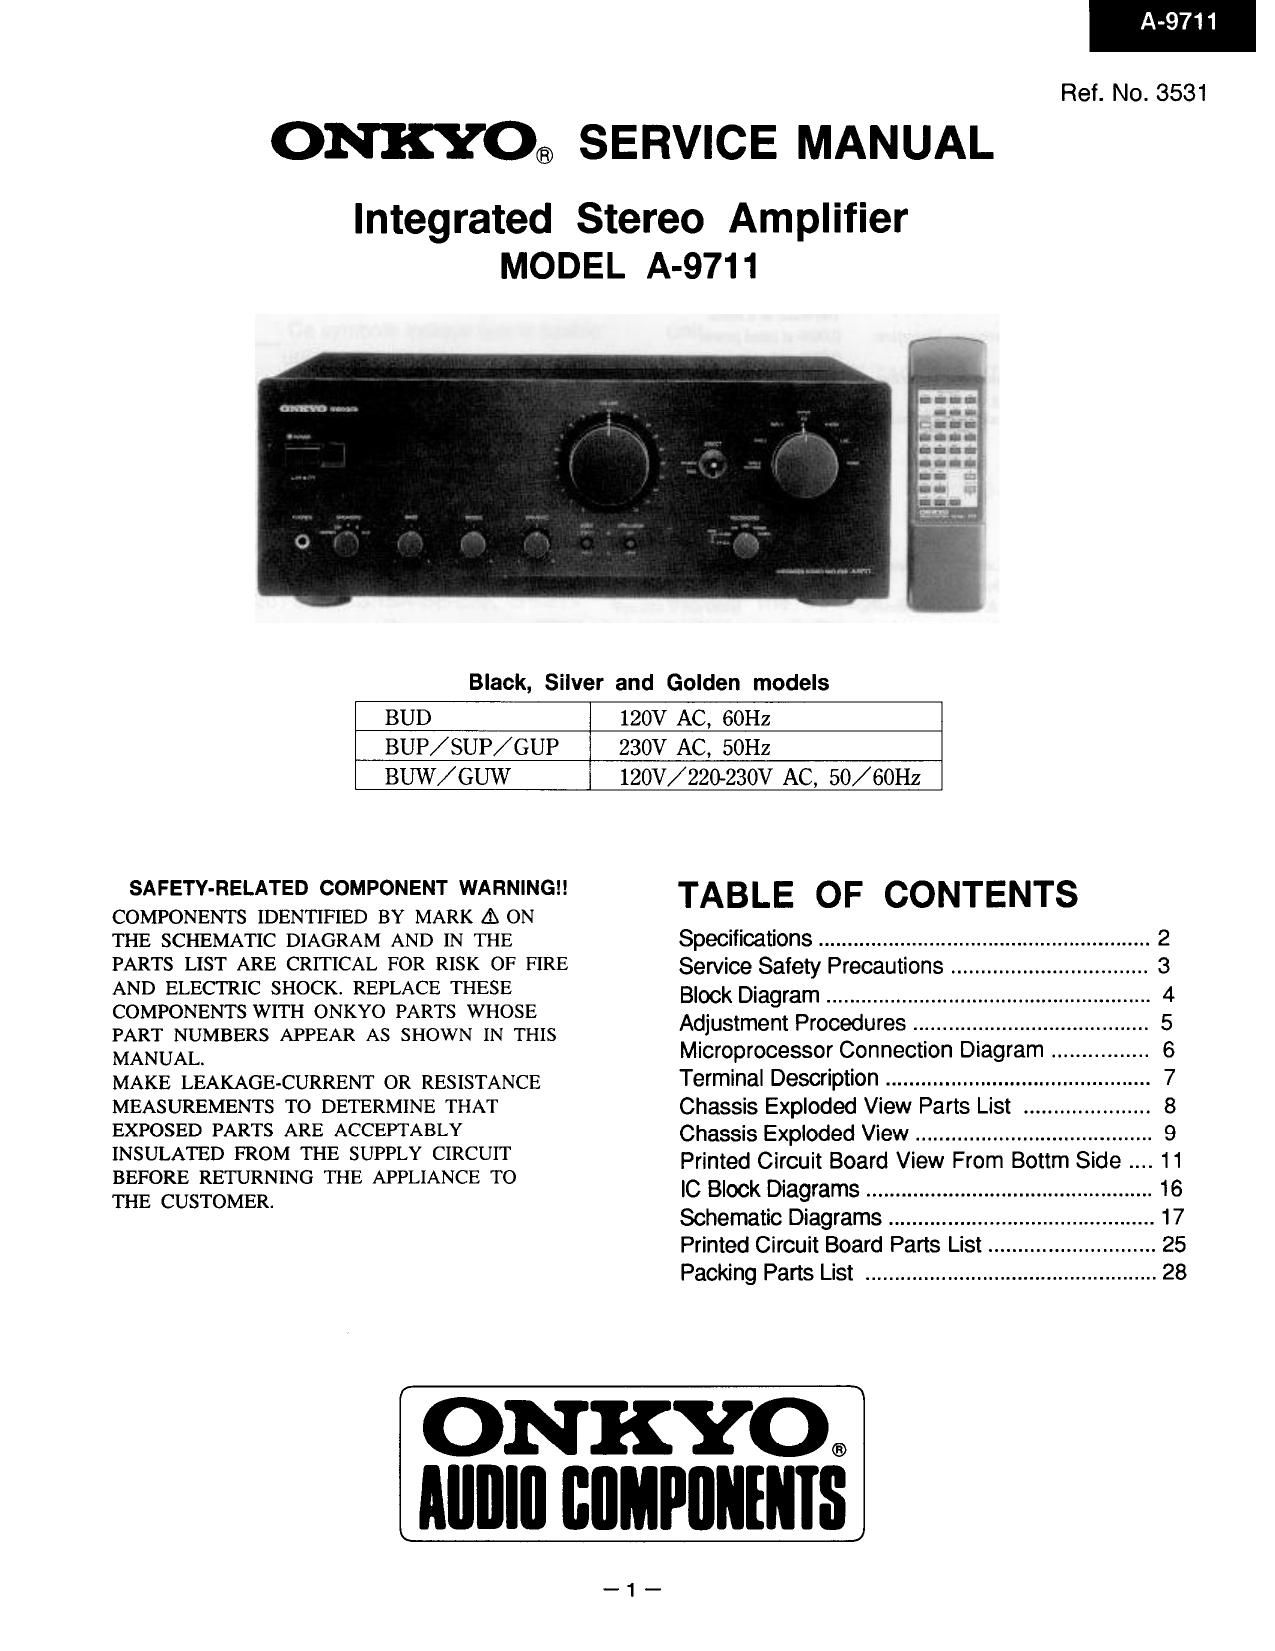 Onkyo A 9711 Service Manual